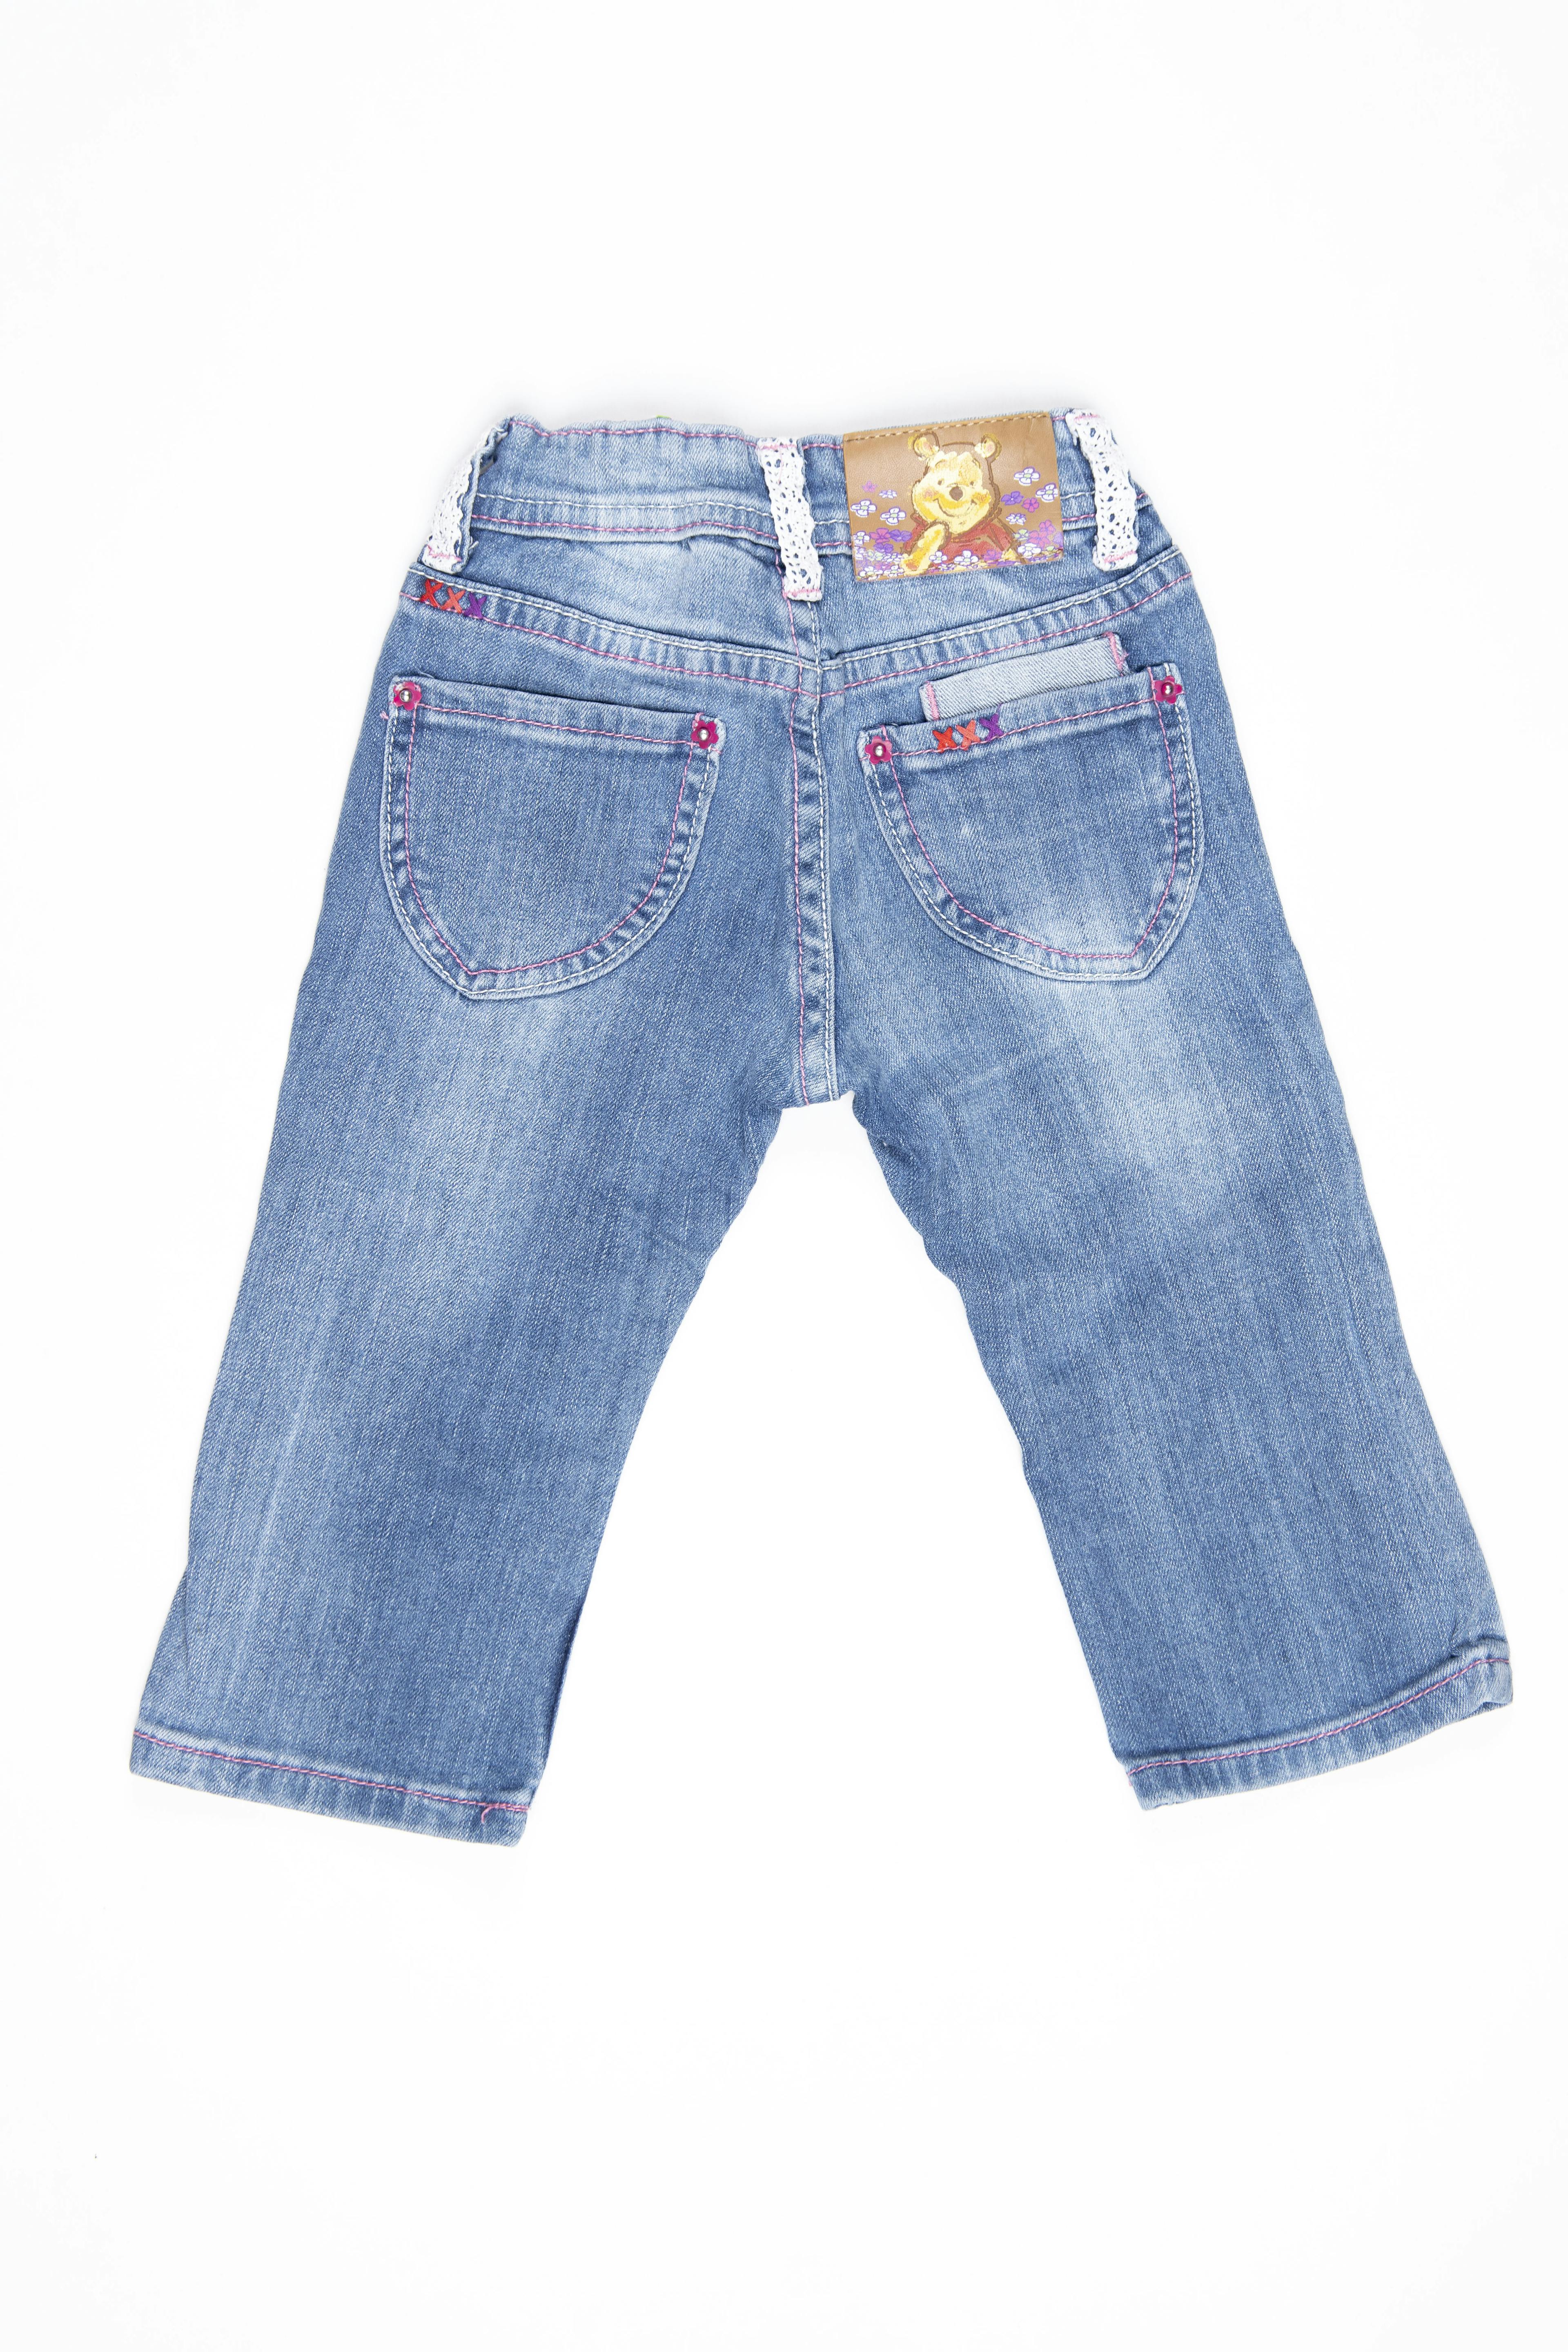 Jean winnie de Pooh, cintura regulable  98% algodón. Talla 1 americana - Disney